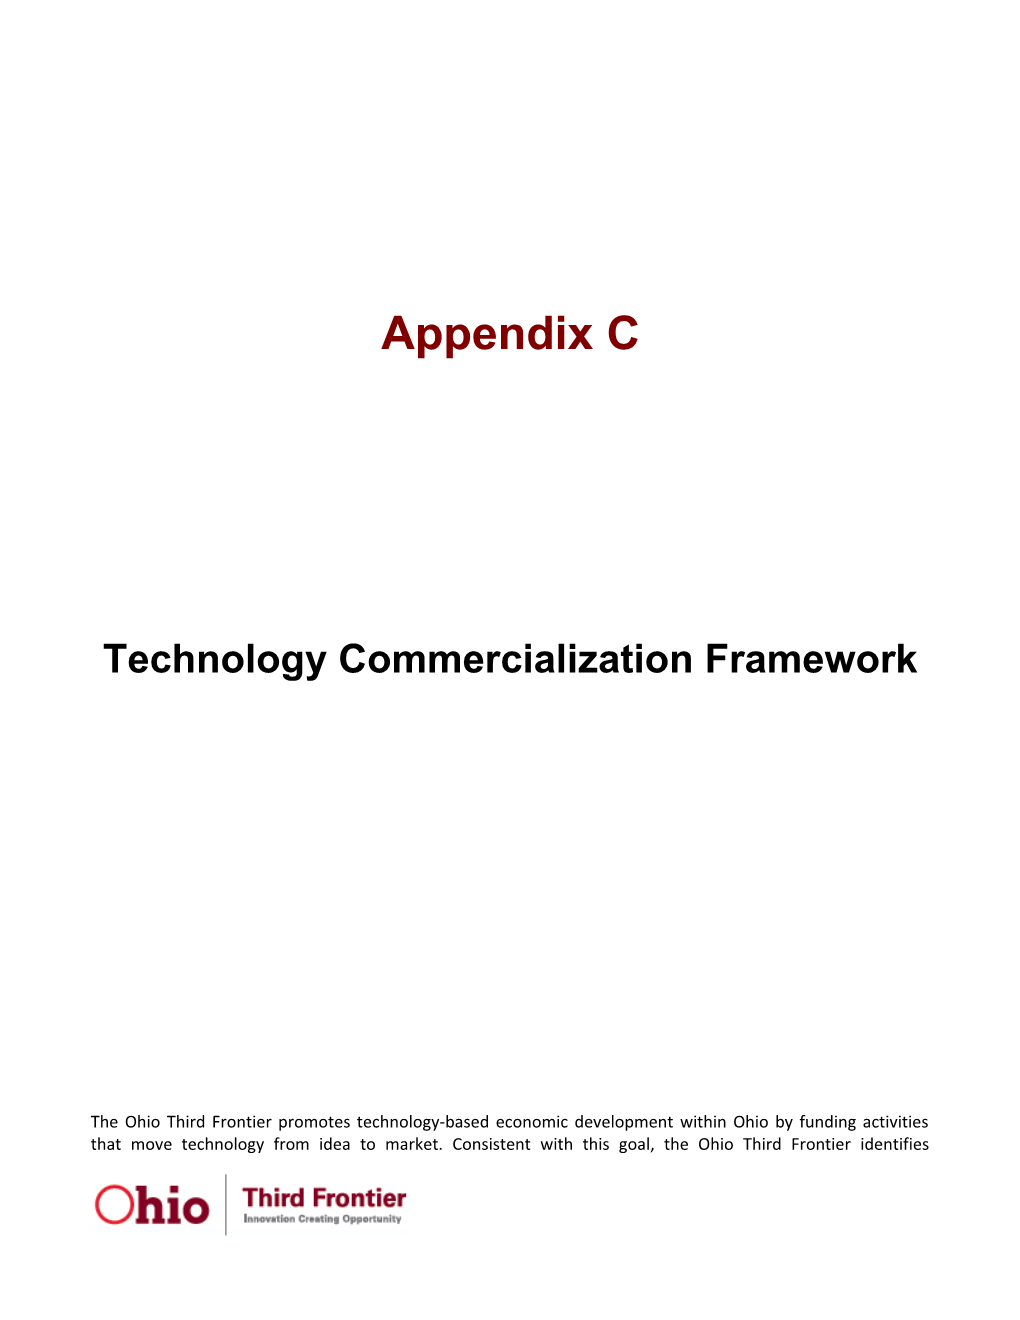 Technology Commercialization Framework